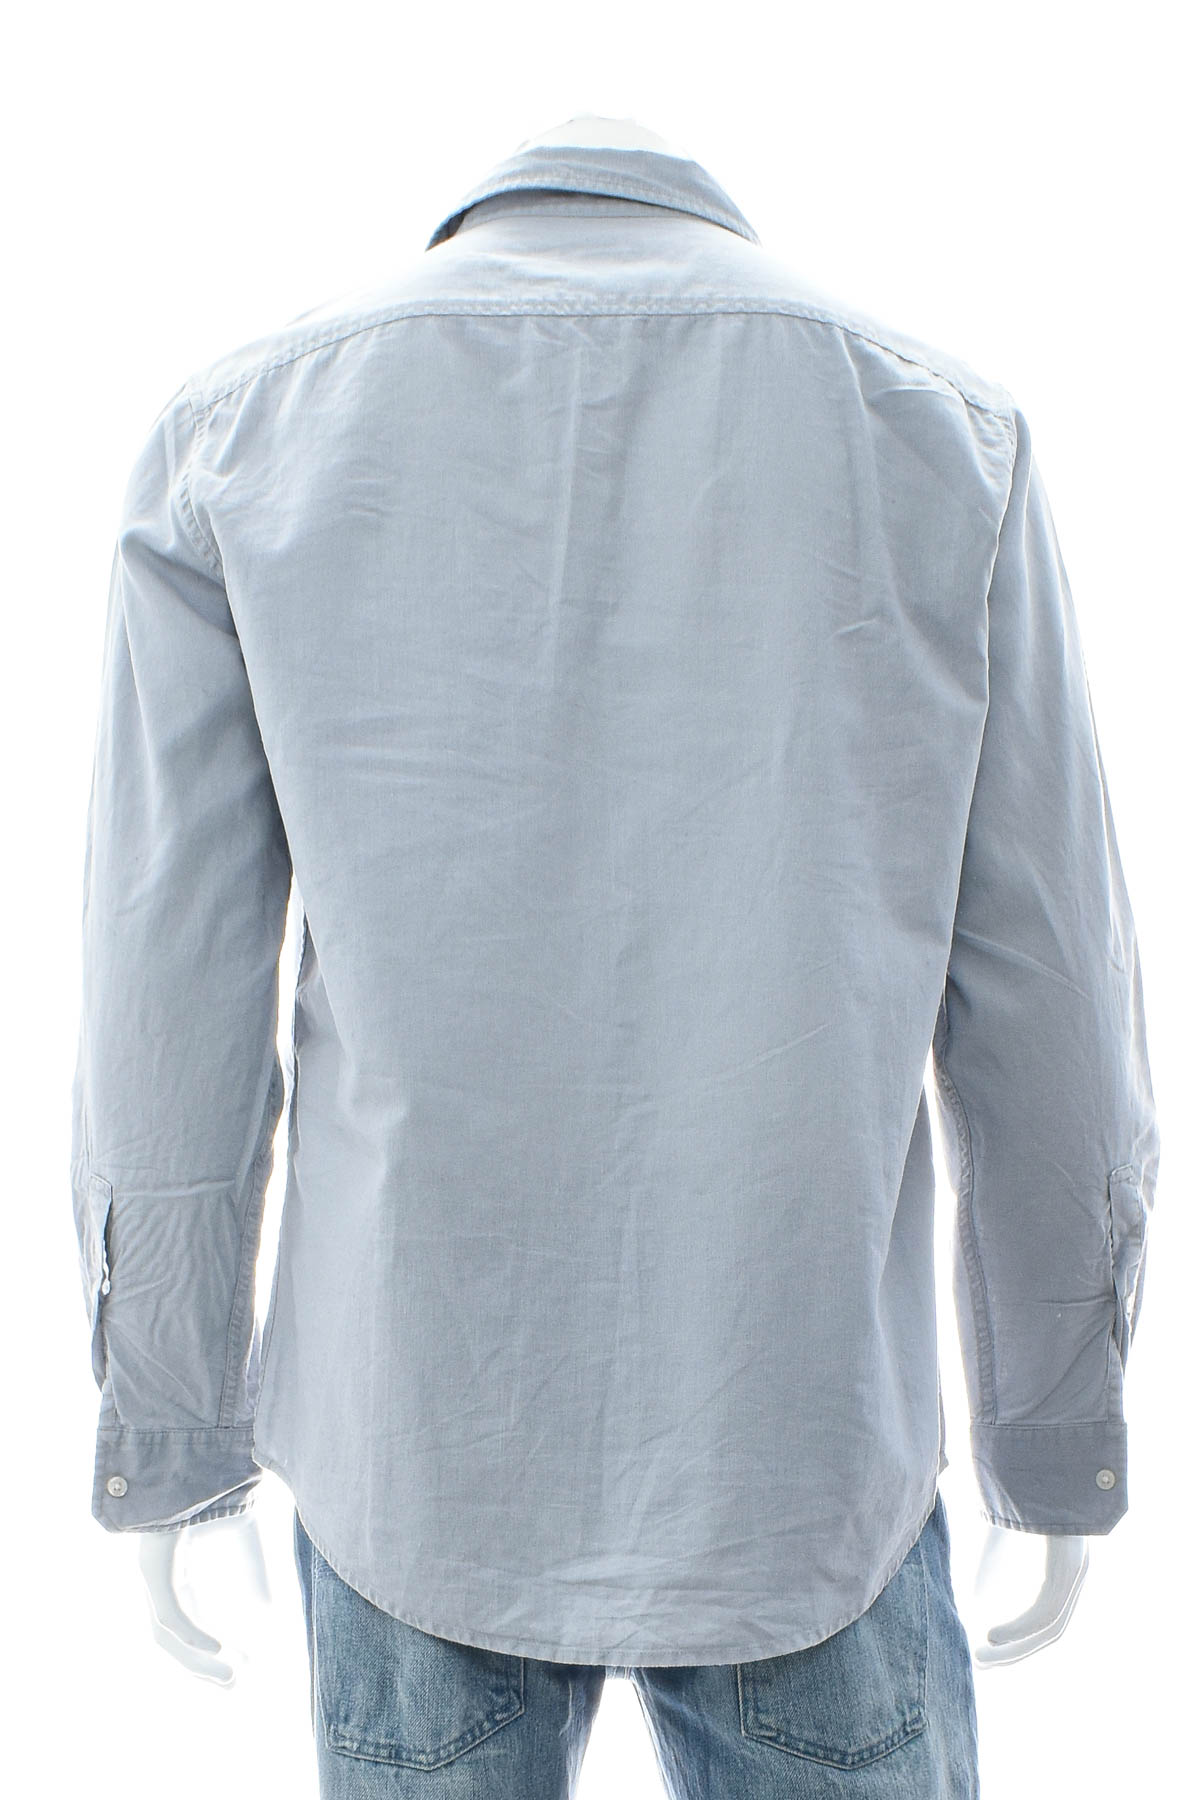 Men's shirt - Michael Kors - 1